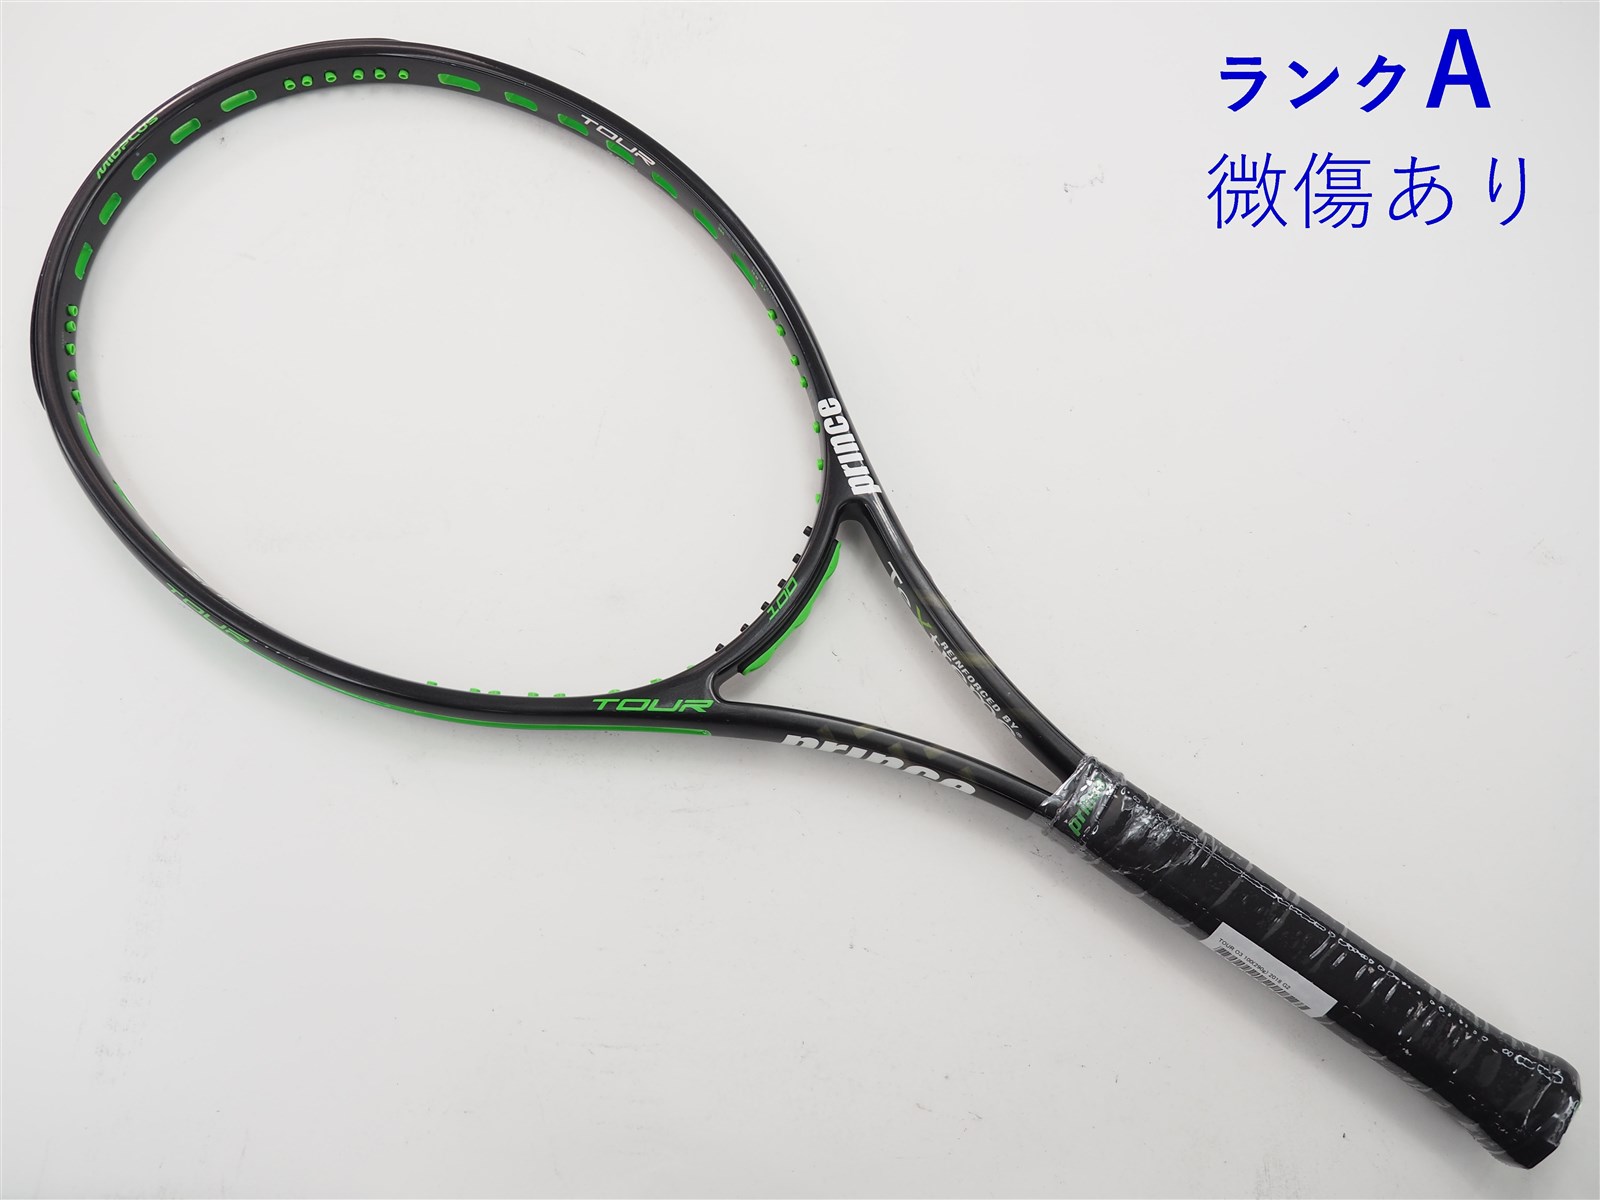 Prince テニスラケット PHANTOM PRO 100XR - ラケット(硬式用)